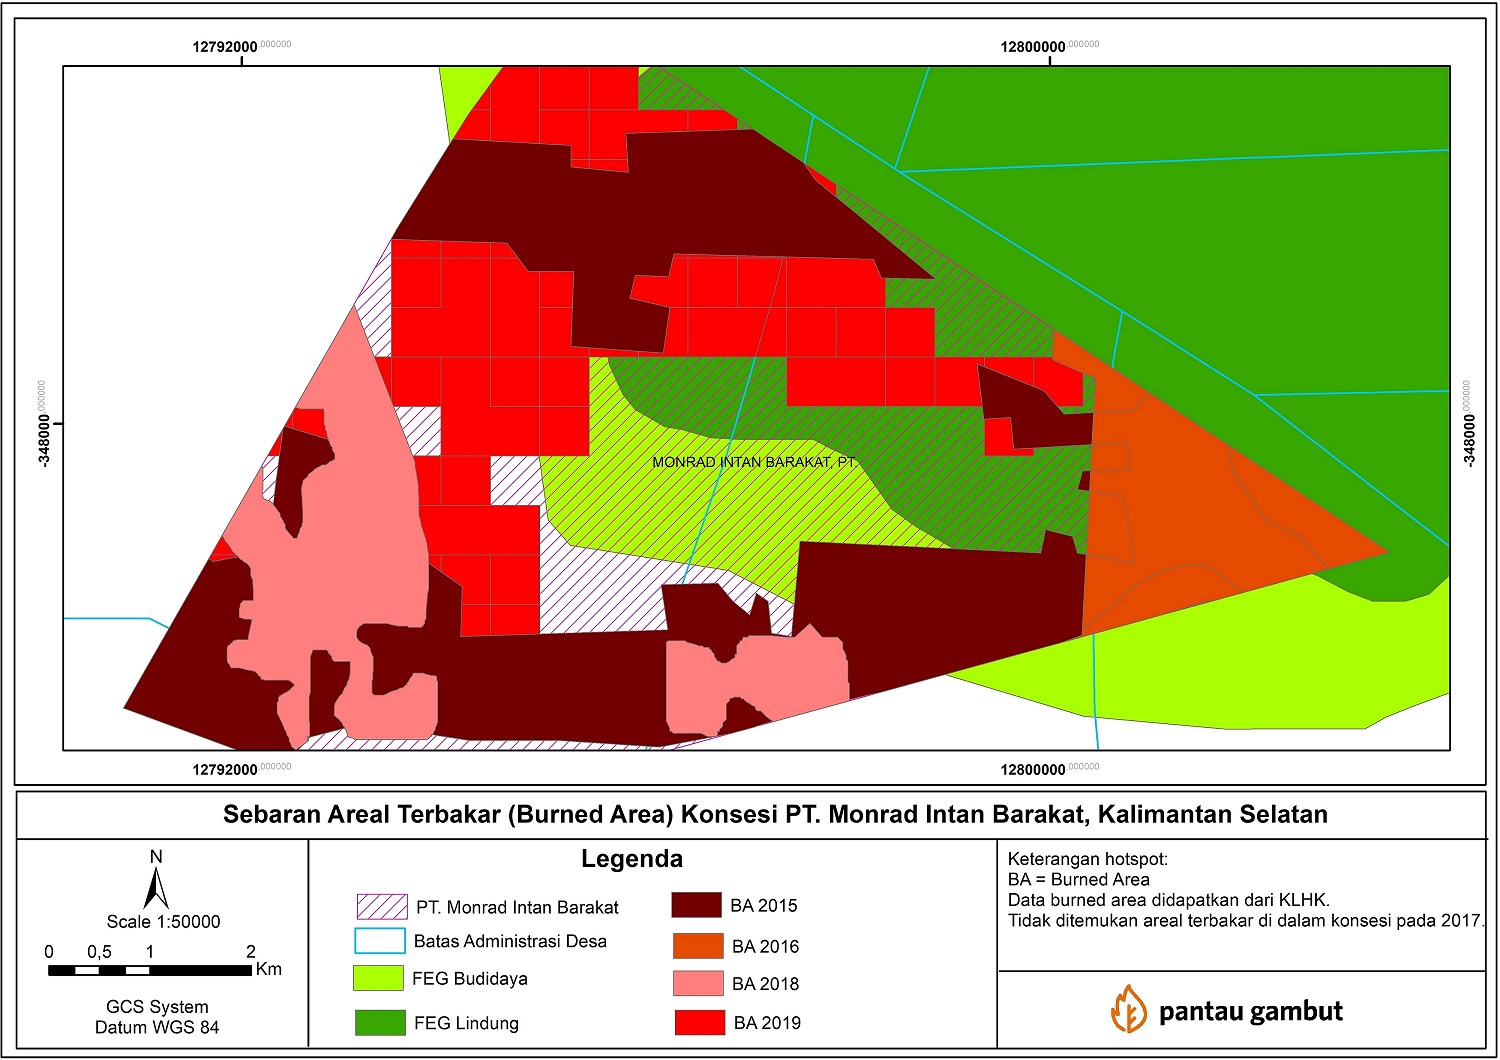 Distribution of burned area on concession area of PT Monrad Intan Barakat during 2015-2019 ©Pantau Gambut